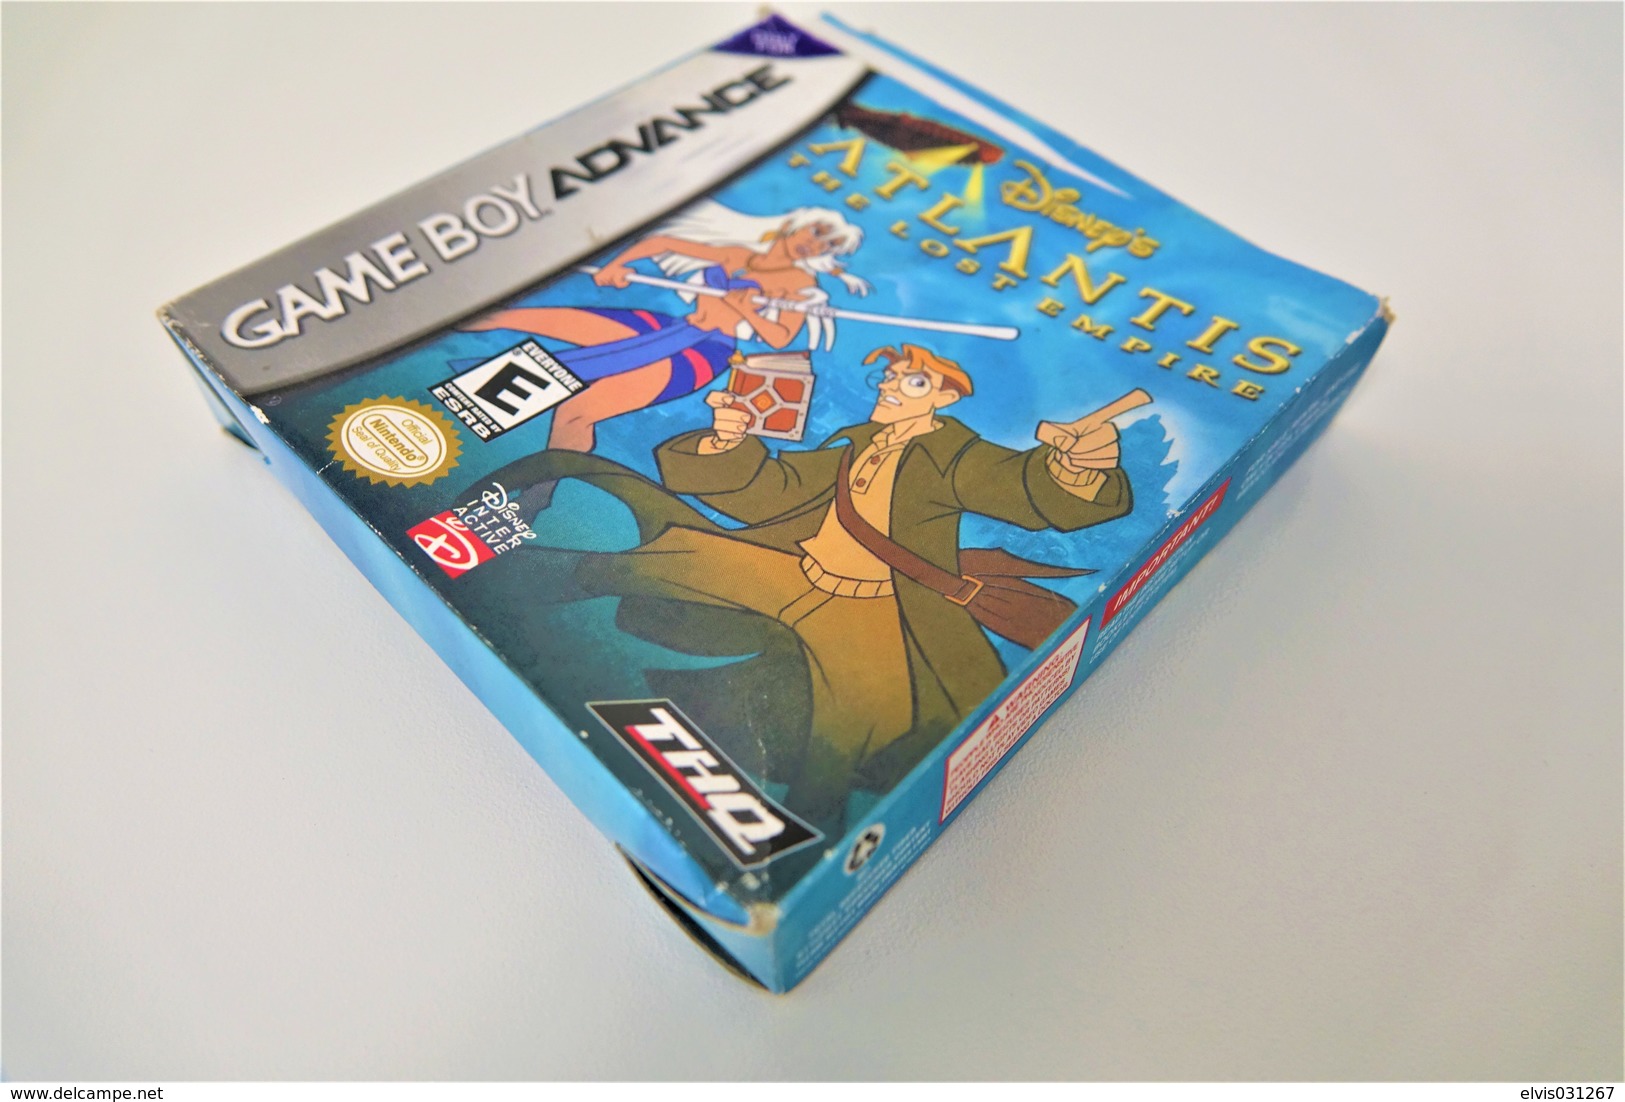 NINTENDO GAMEBOY ADVANCE: DISNEY'S ATLANTIS THE LOST EMPIRE WITH BOX - THQ - 2001 - Game Boy Advance